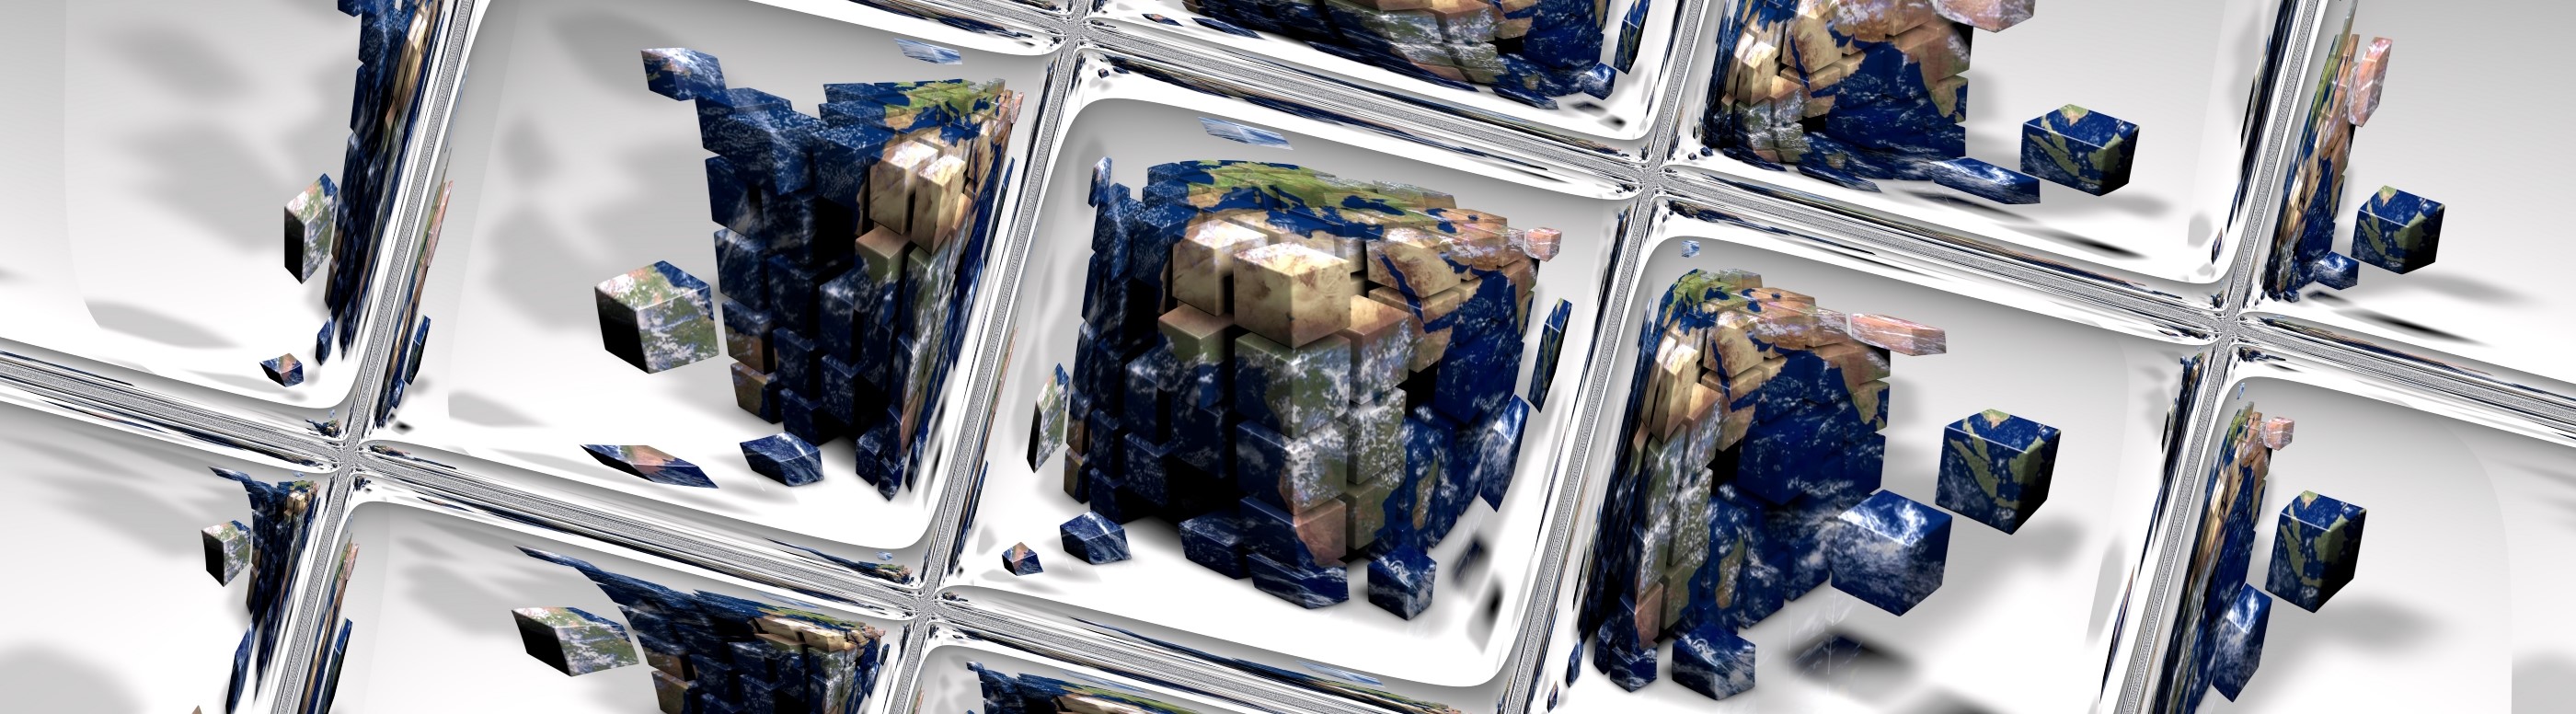 A blurry image of a cube-shaped globe